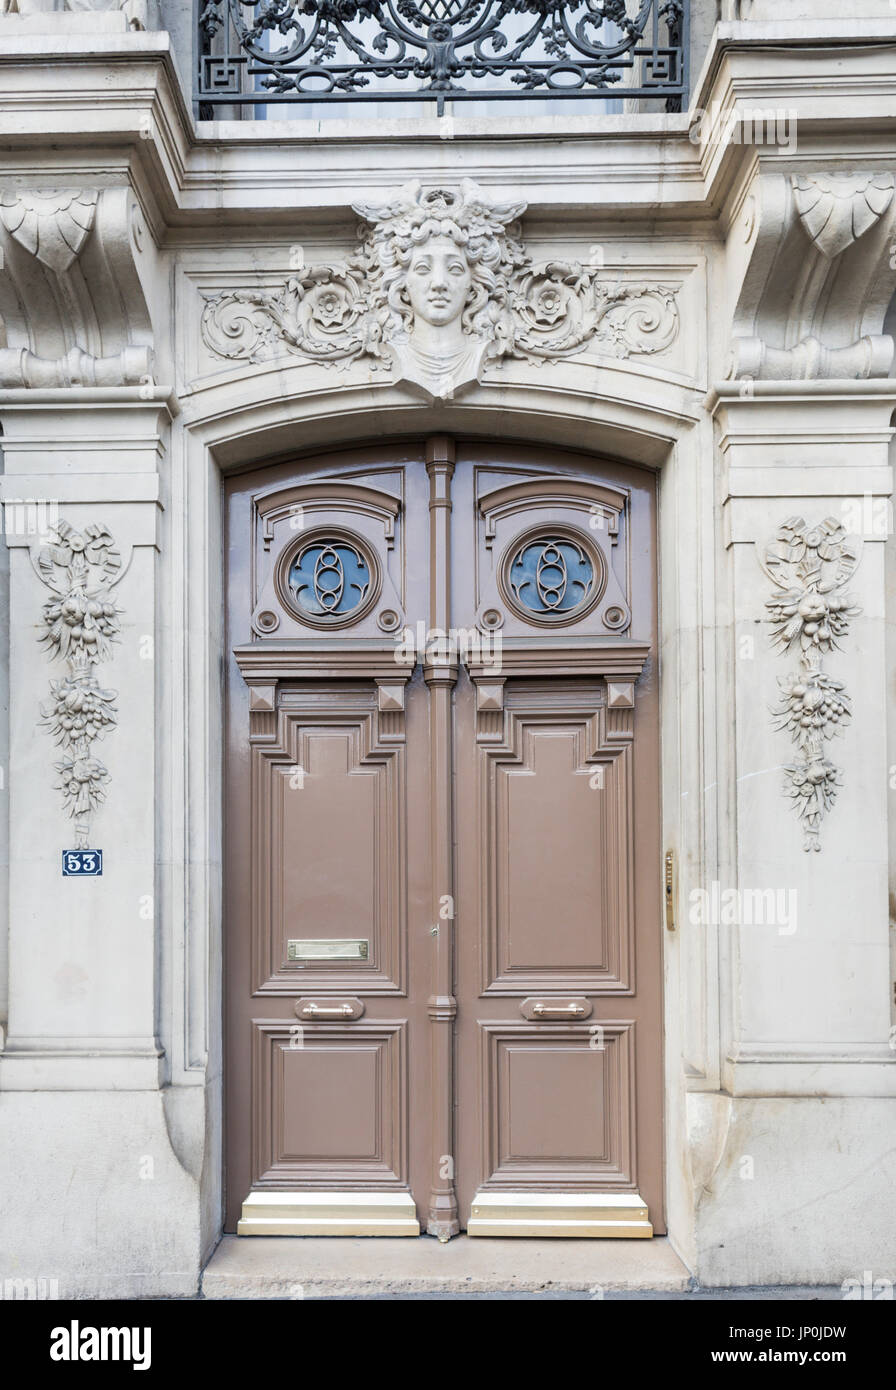 Paris, France - March 2, 2016: Elegant brown door and carved stone doorway at No 53 Quai des Grands Augustins on the left bank of the Seine opposite Ile de la Cite, Paris. Stock Photo